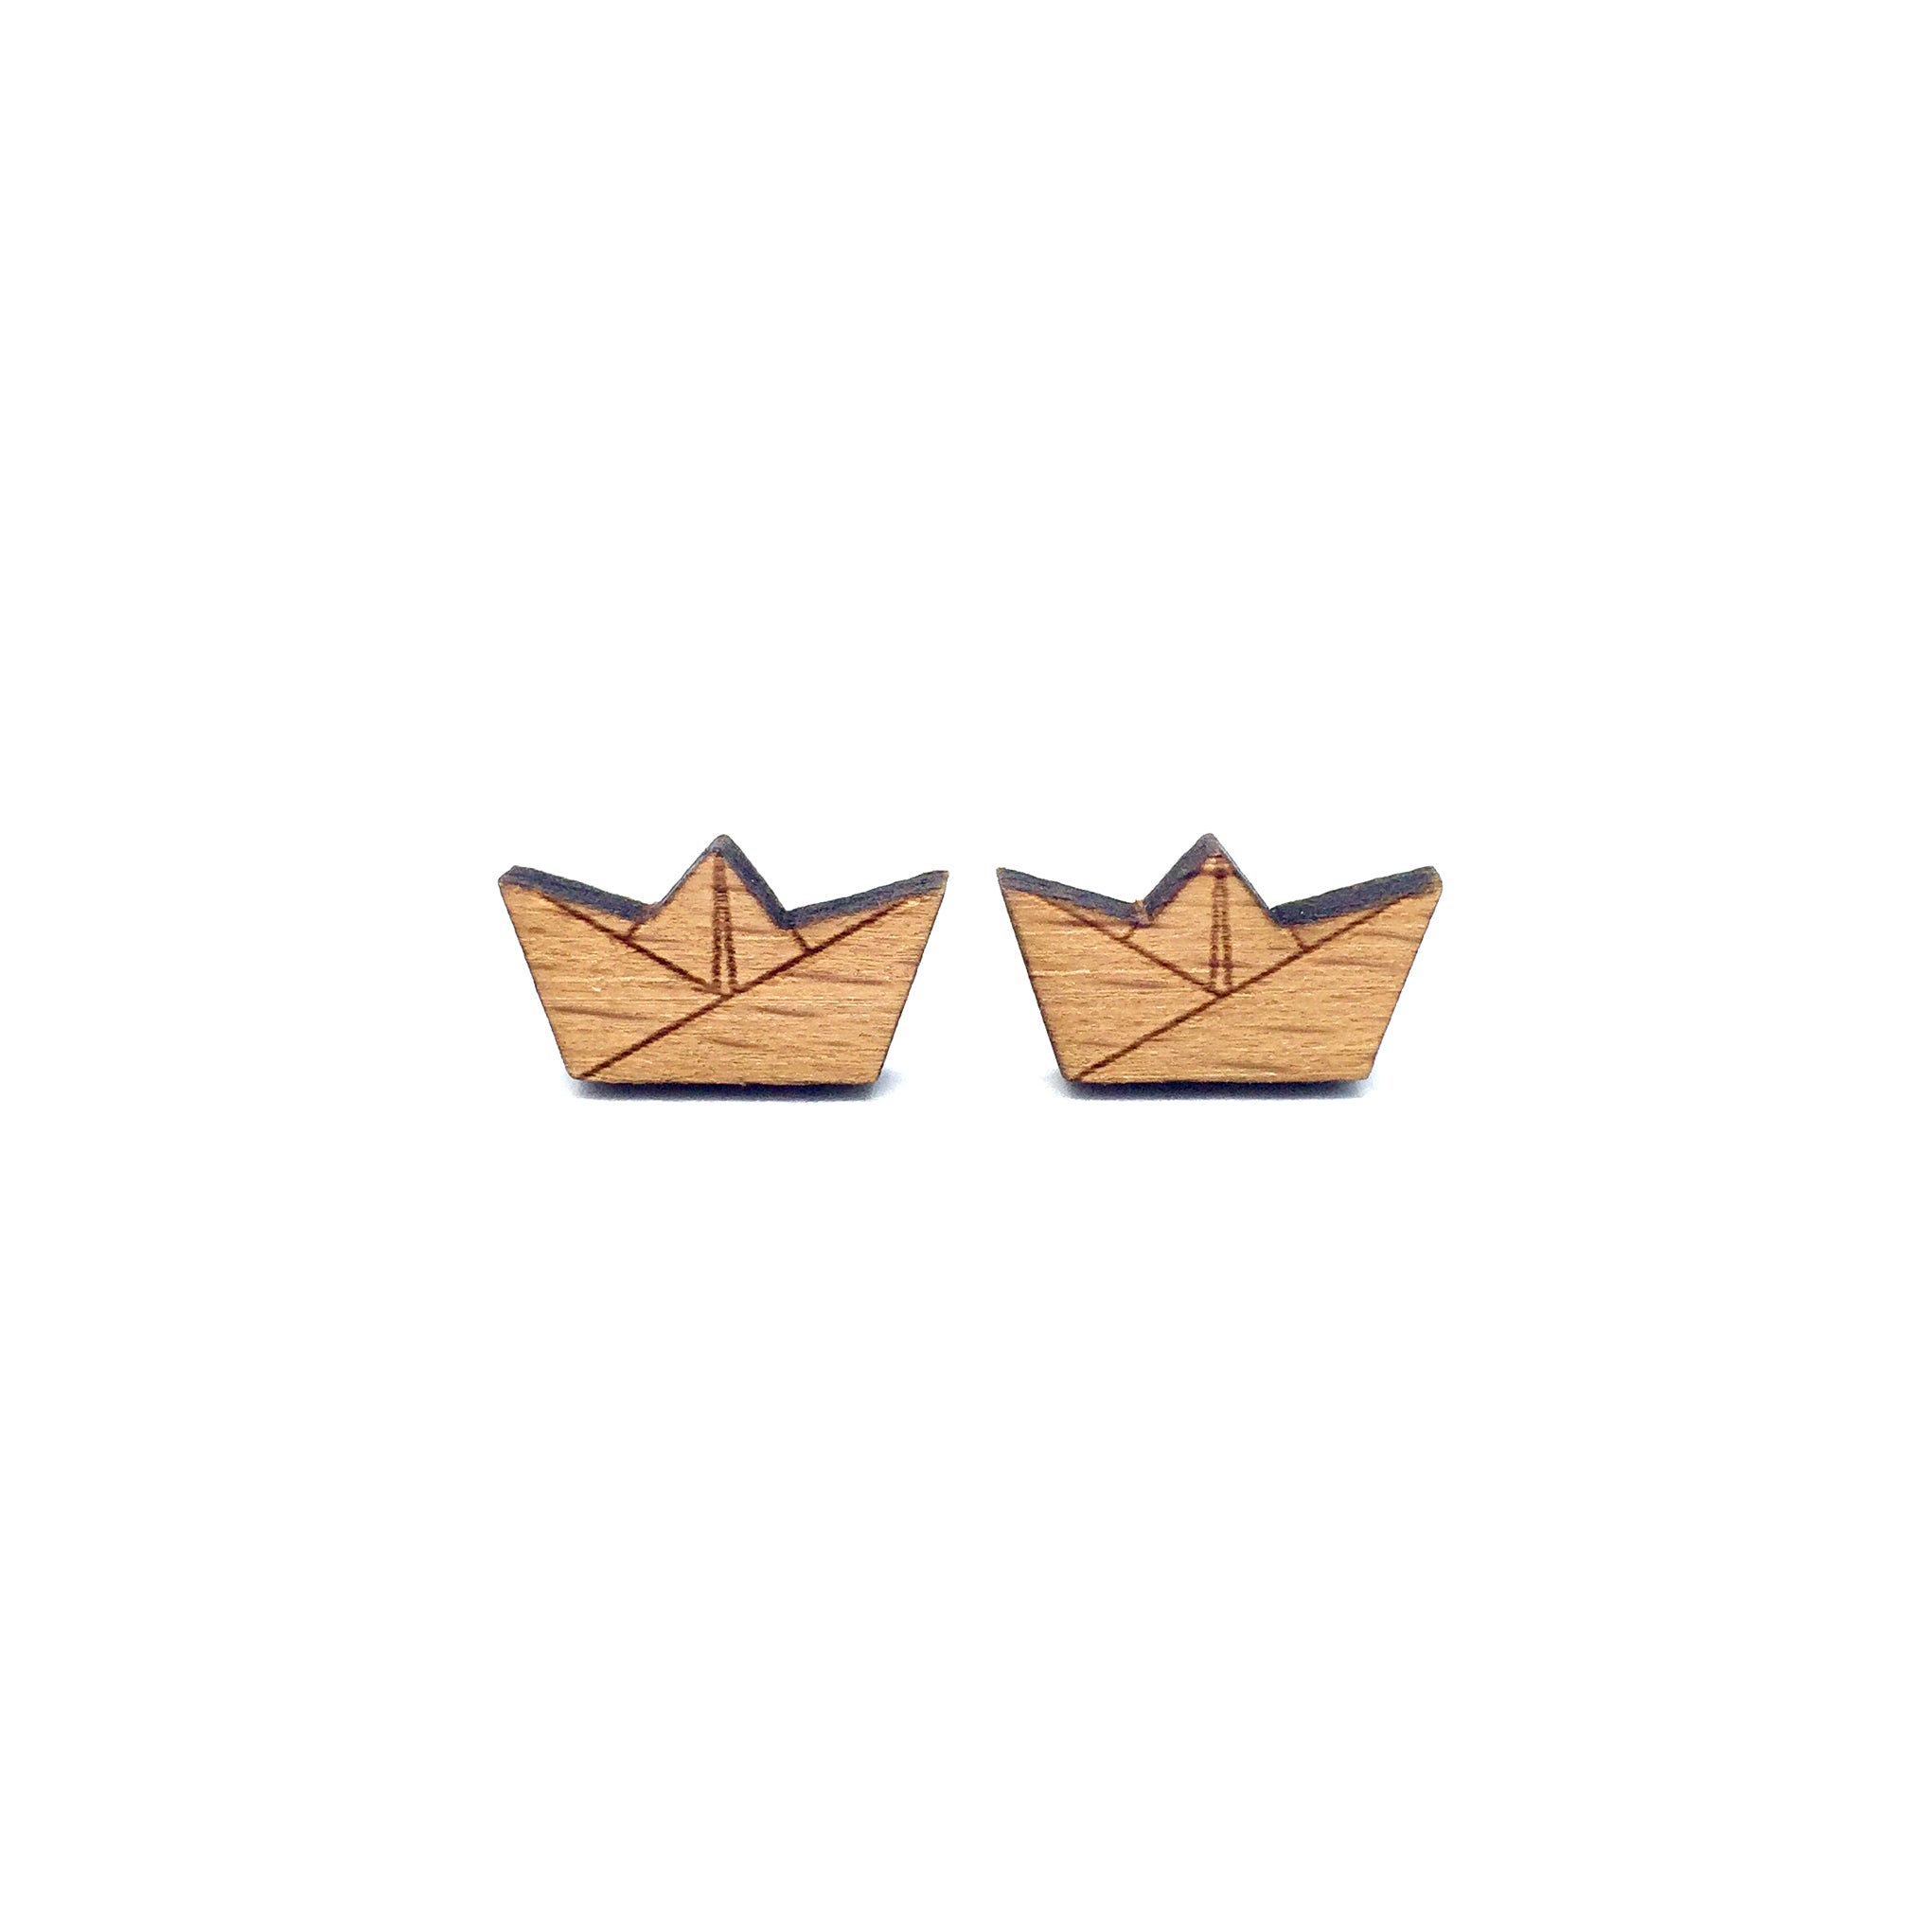 Origami Paper Boat Laser Cut Wood Earrings - LM